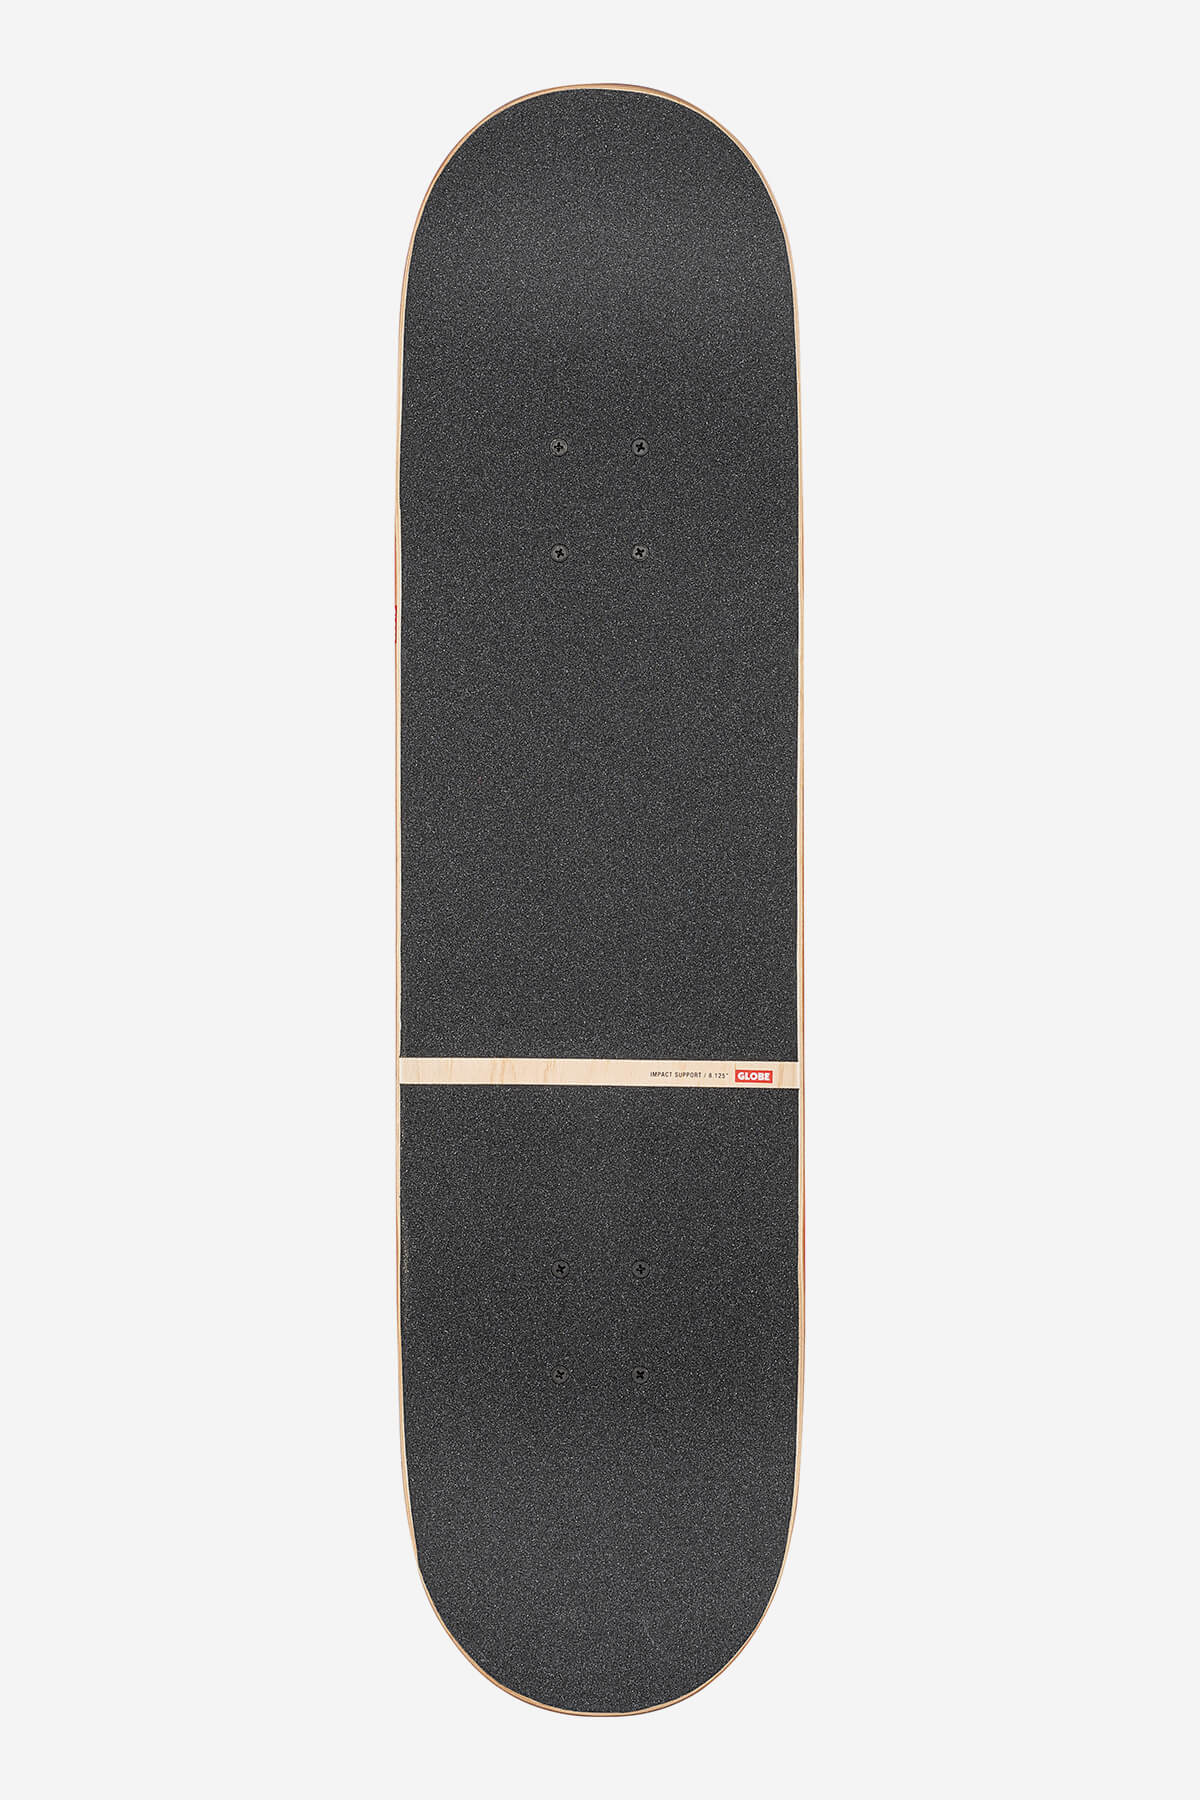 Globe - G3 Bar - Impact/Nebula - 8.125" Complete Skateboard